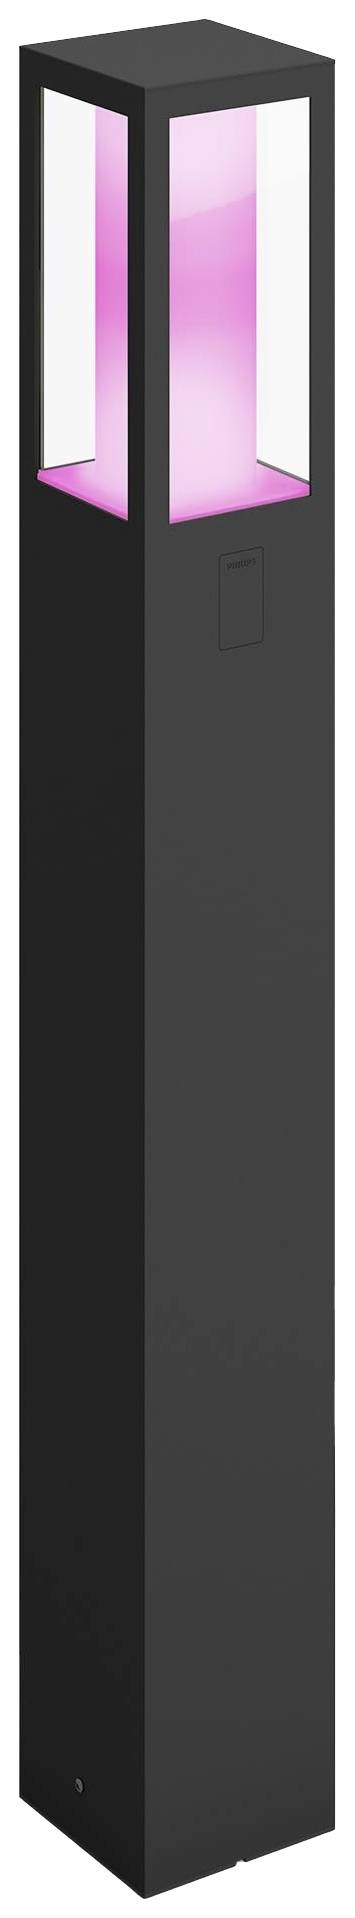 PHILIPS Hue White & Color Amb. Impress LED Wegeleuchte, Schwarz, 1200lm